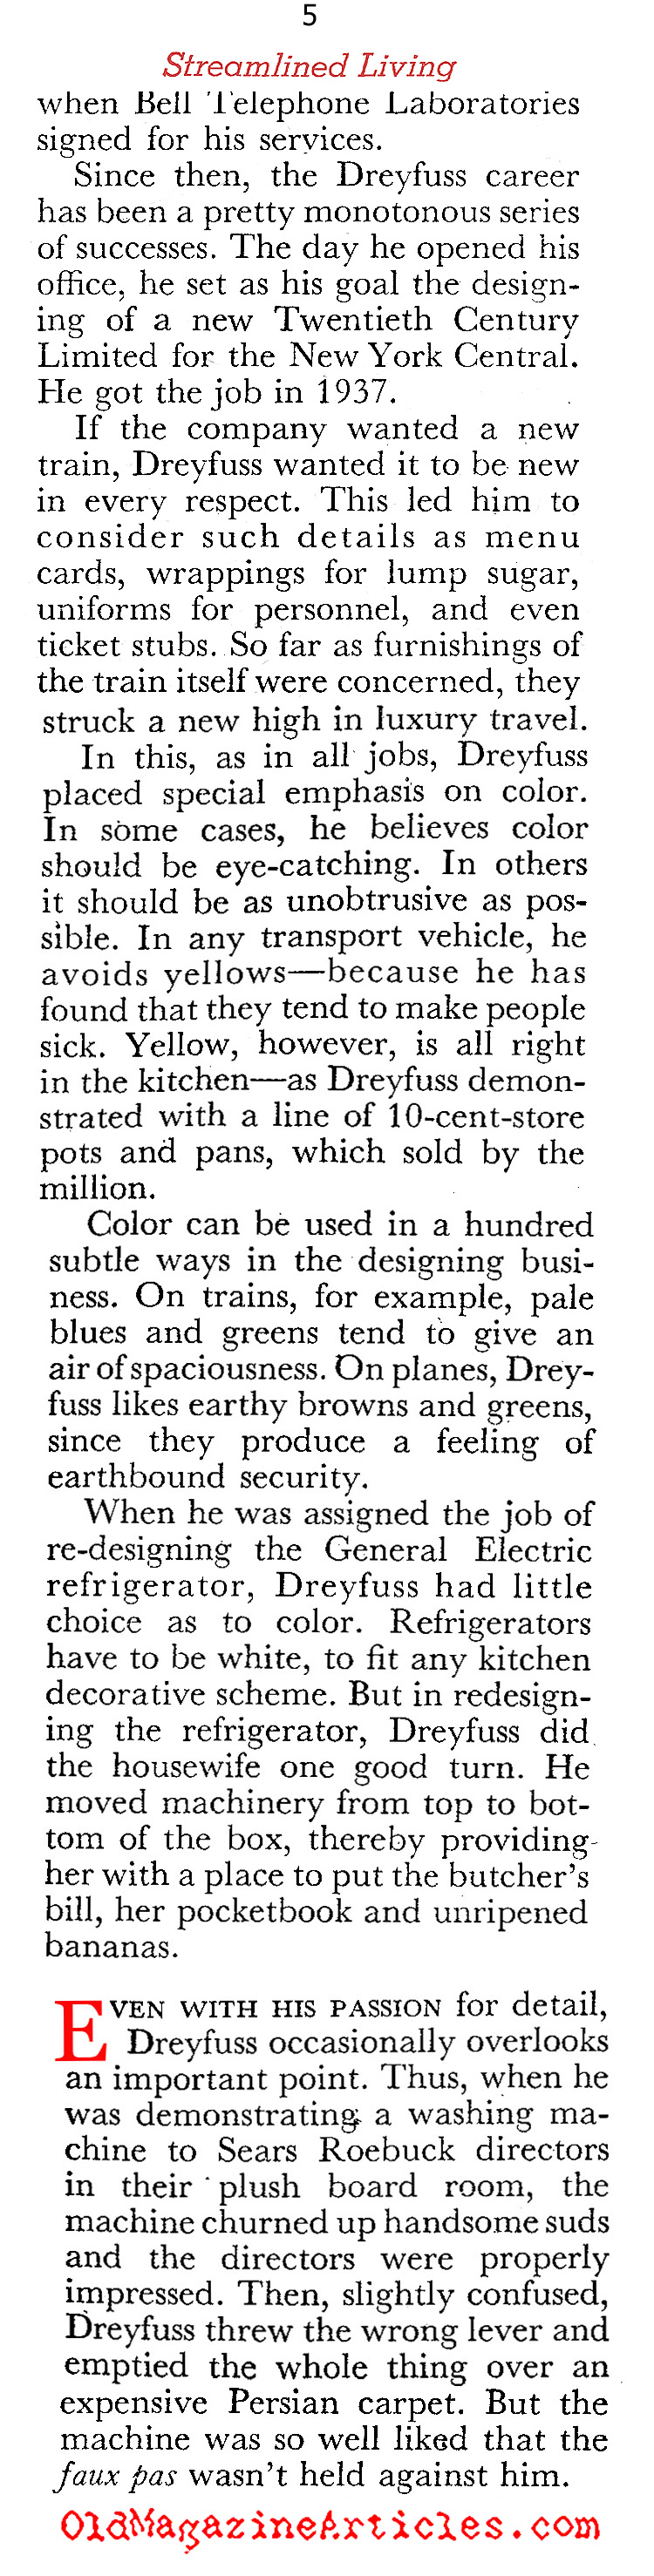 Henry Dreyfuss (Coronet Magazine, 1947)